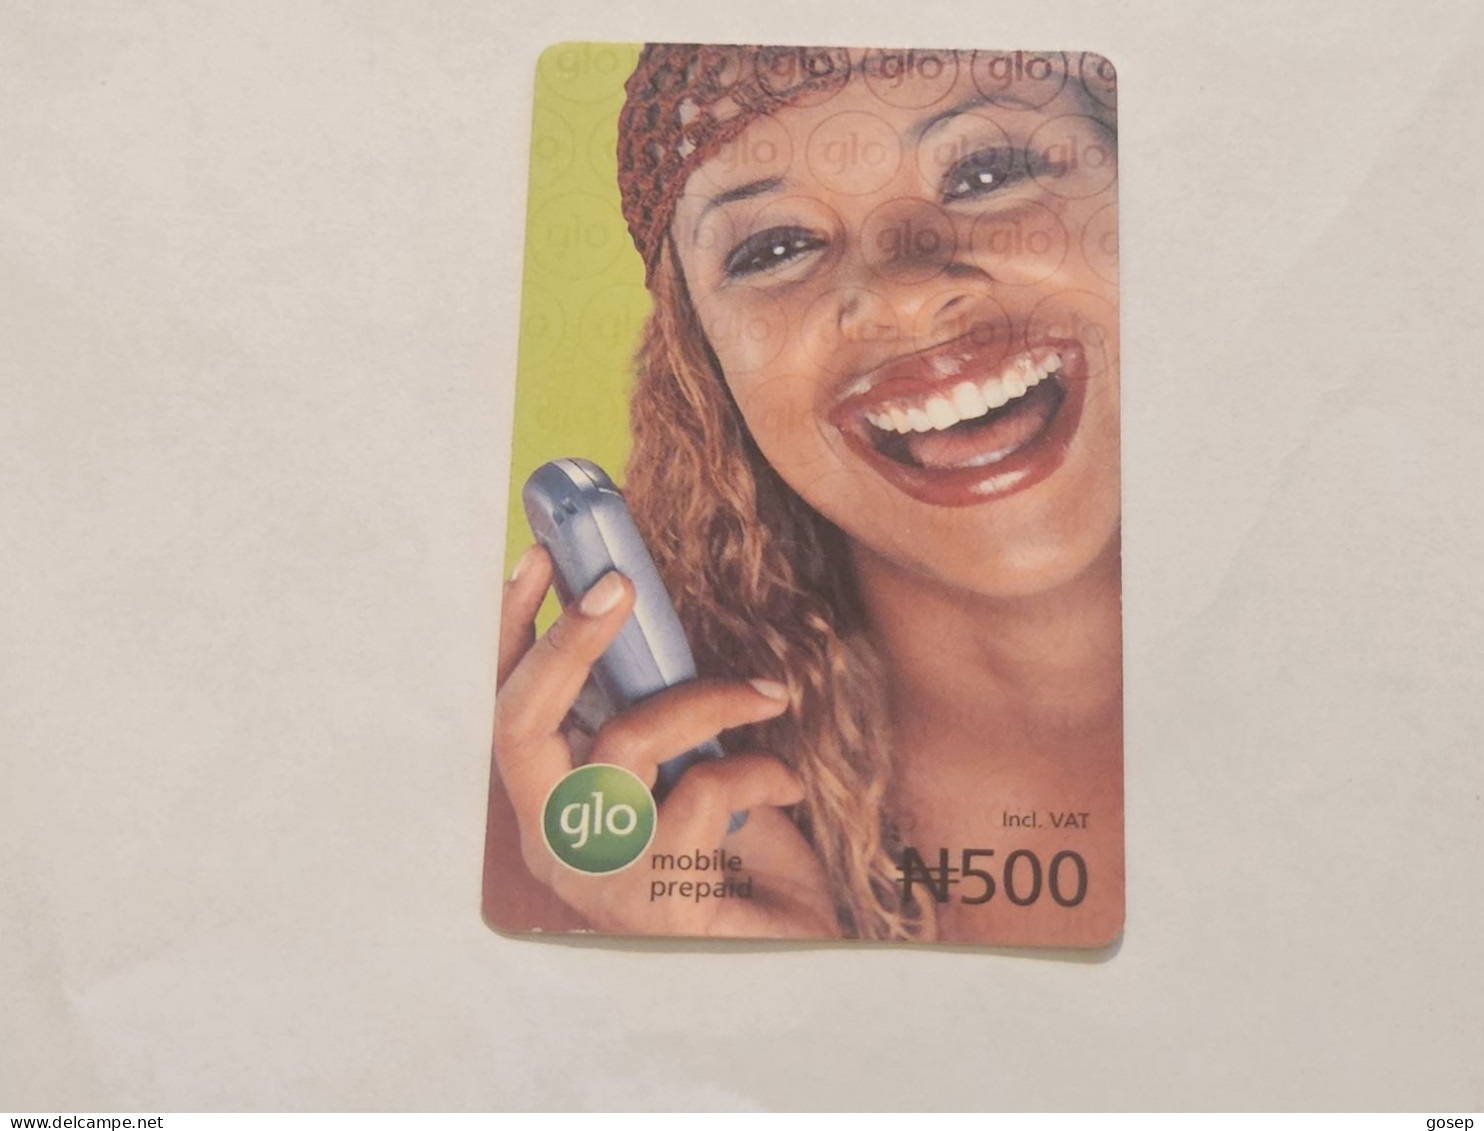 NIGERIA(NG-GLO-REF-0003-071018)(32)Girl With Mobile Phone(Vertical)(24-6442-6609-6012)(500 Naria Nigri-18.10.07send Card - Nigeria